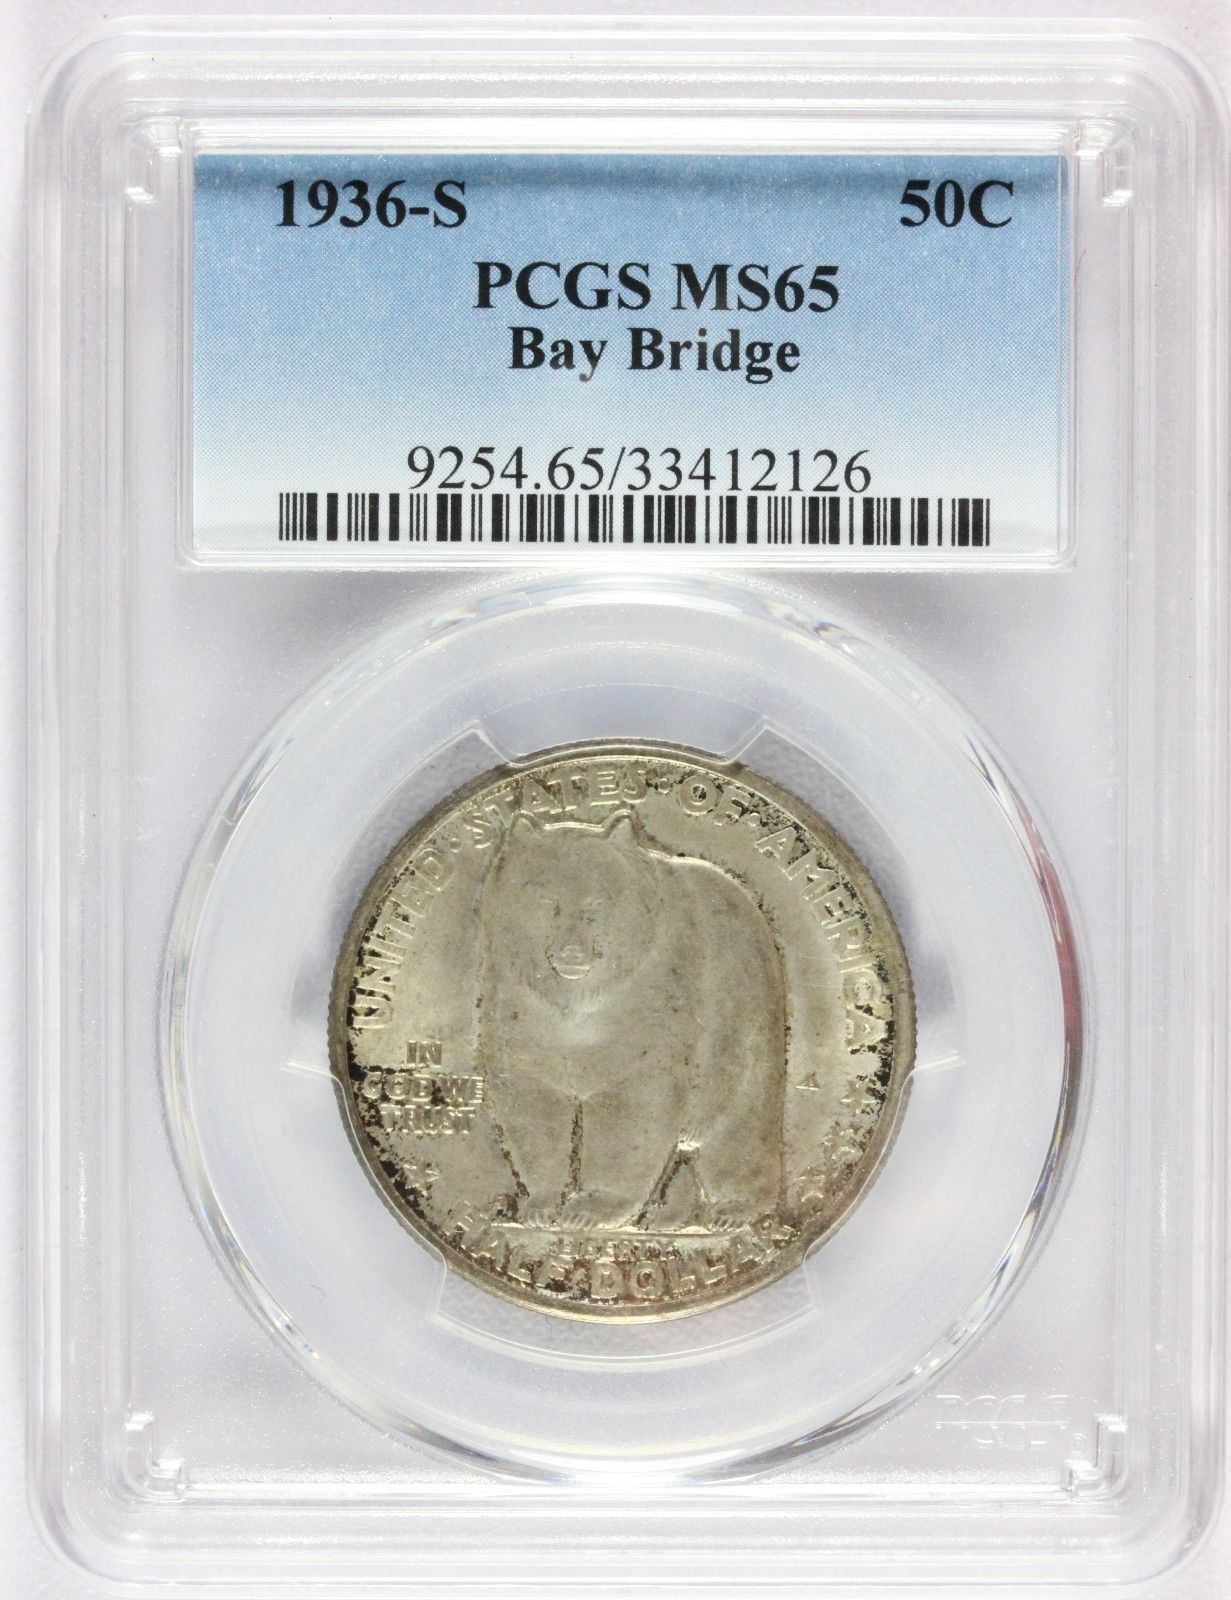 1936-S U.S. Bay Bridge Commemorative Half Dollar Silver Coin - PCGS MS 65